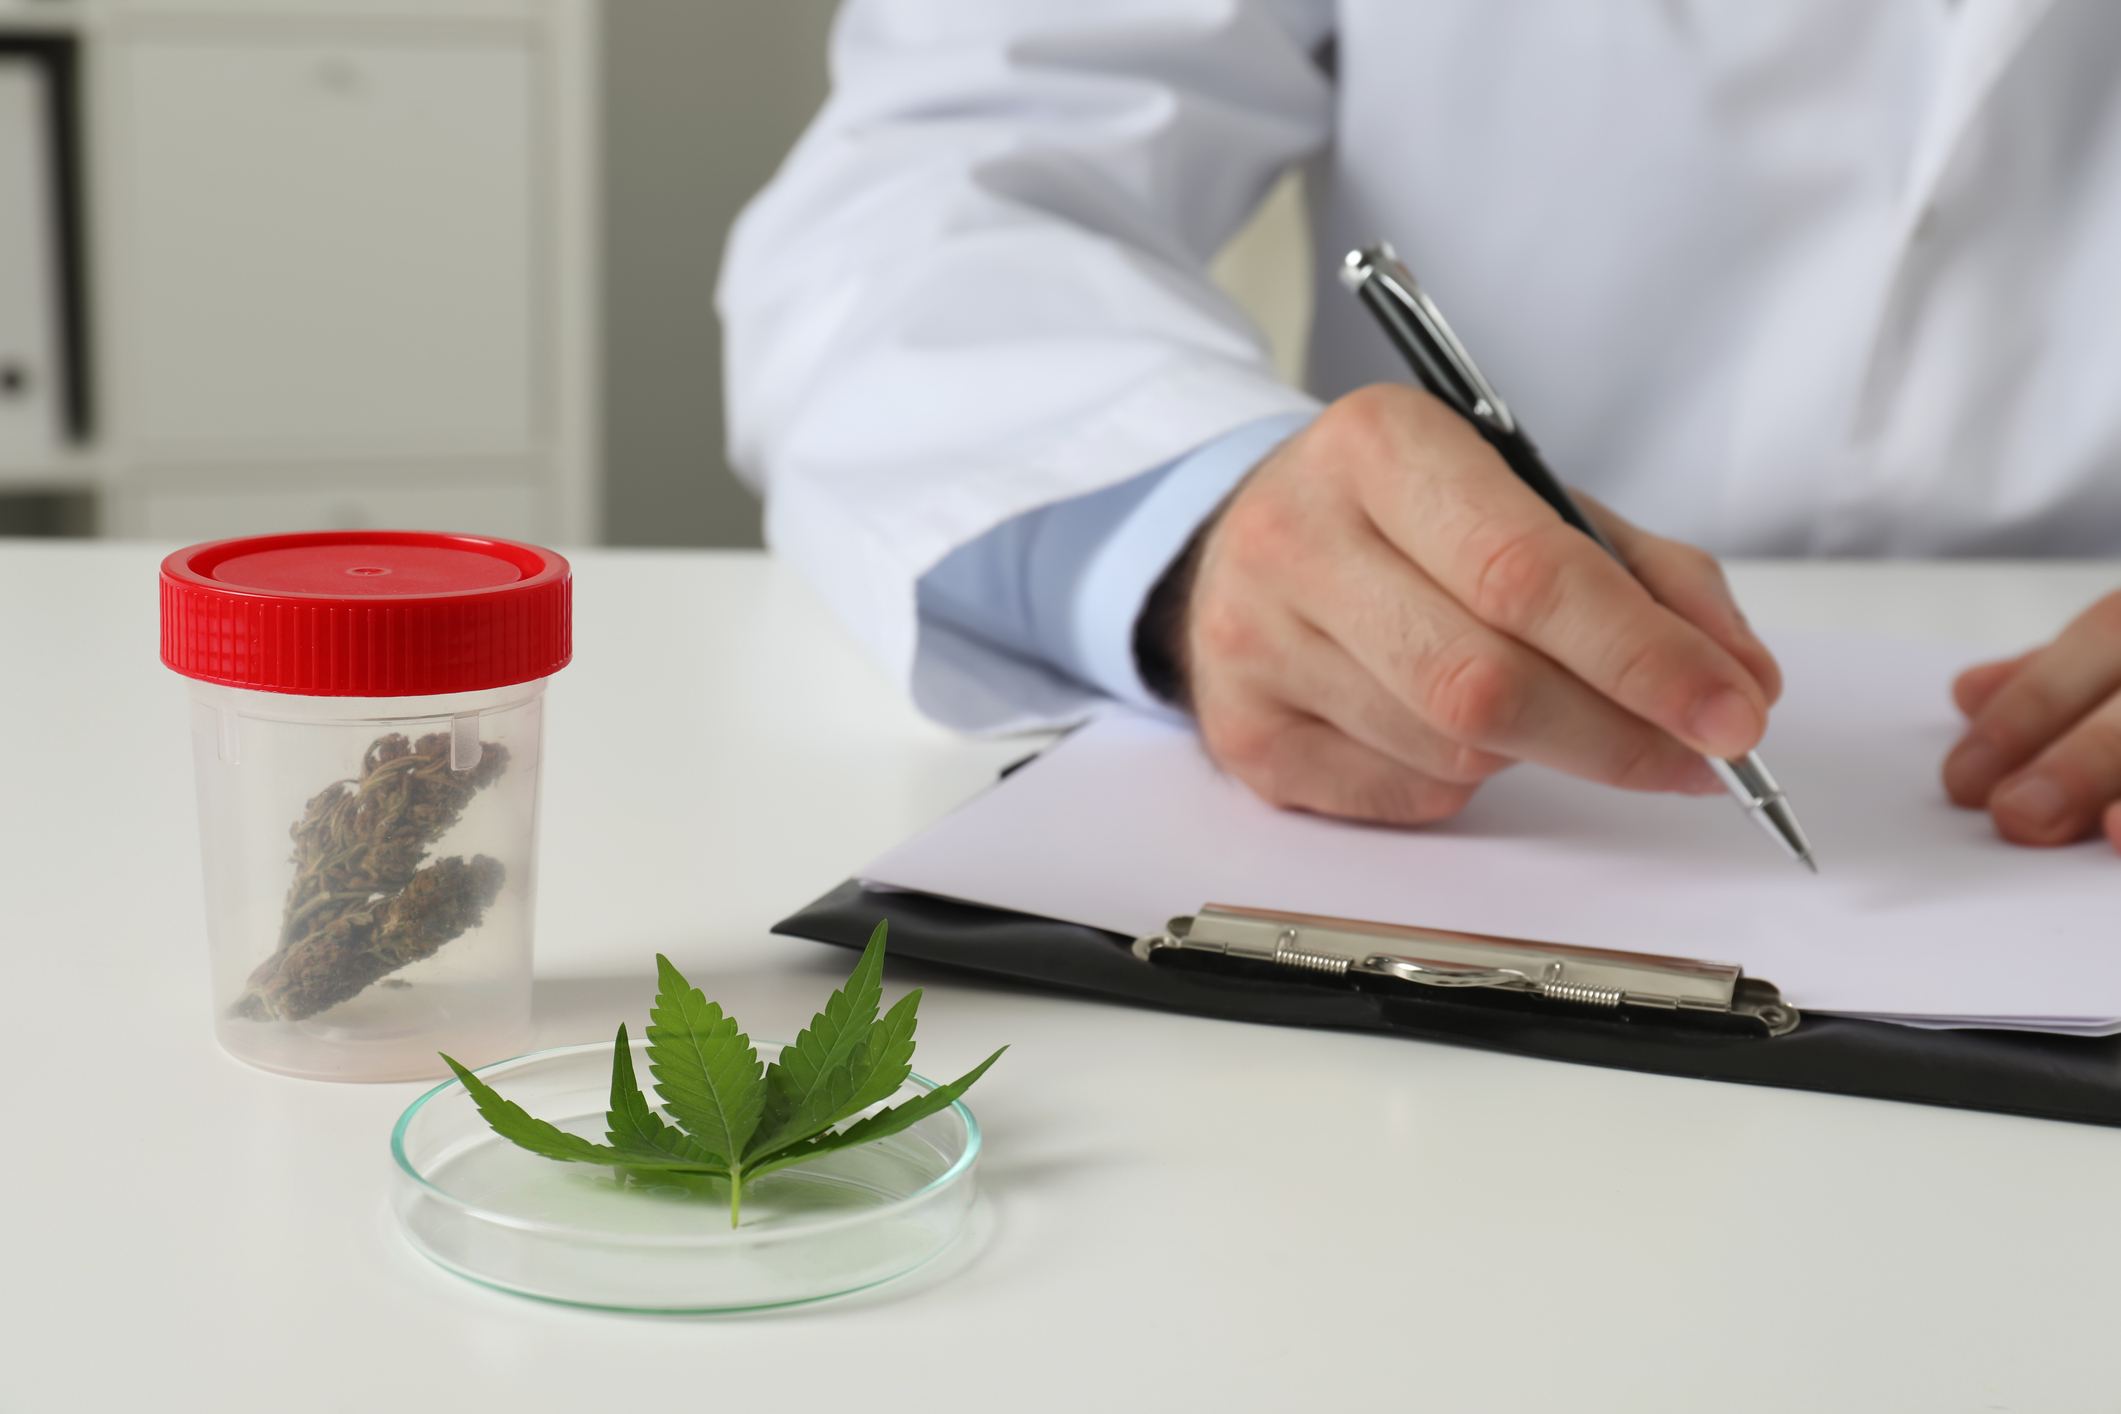 UK's legal framework for medical cannabis